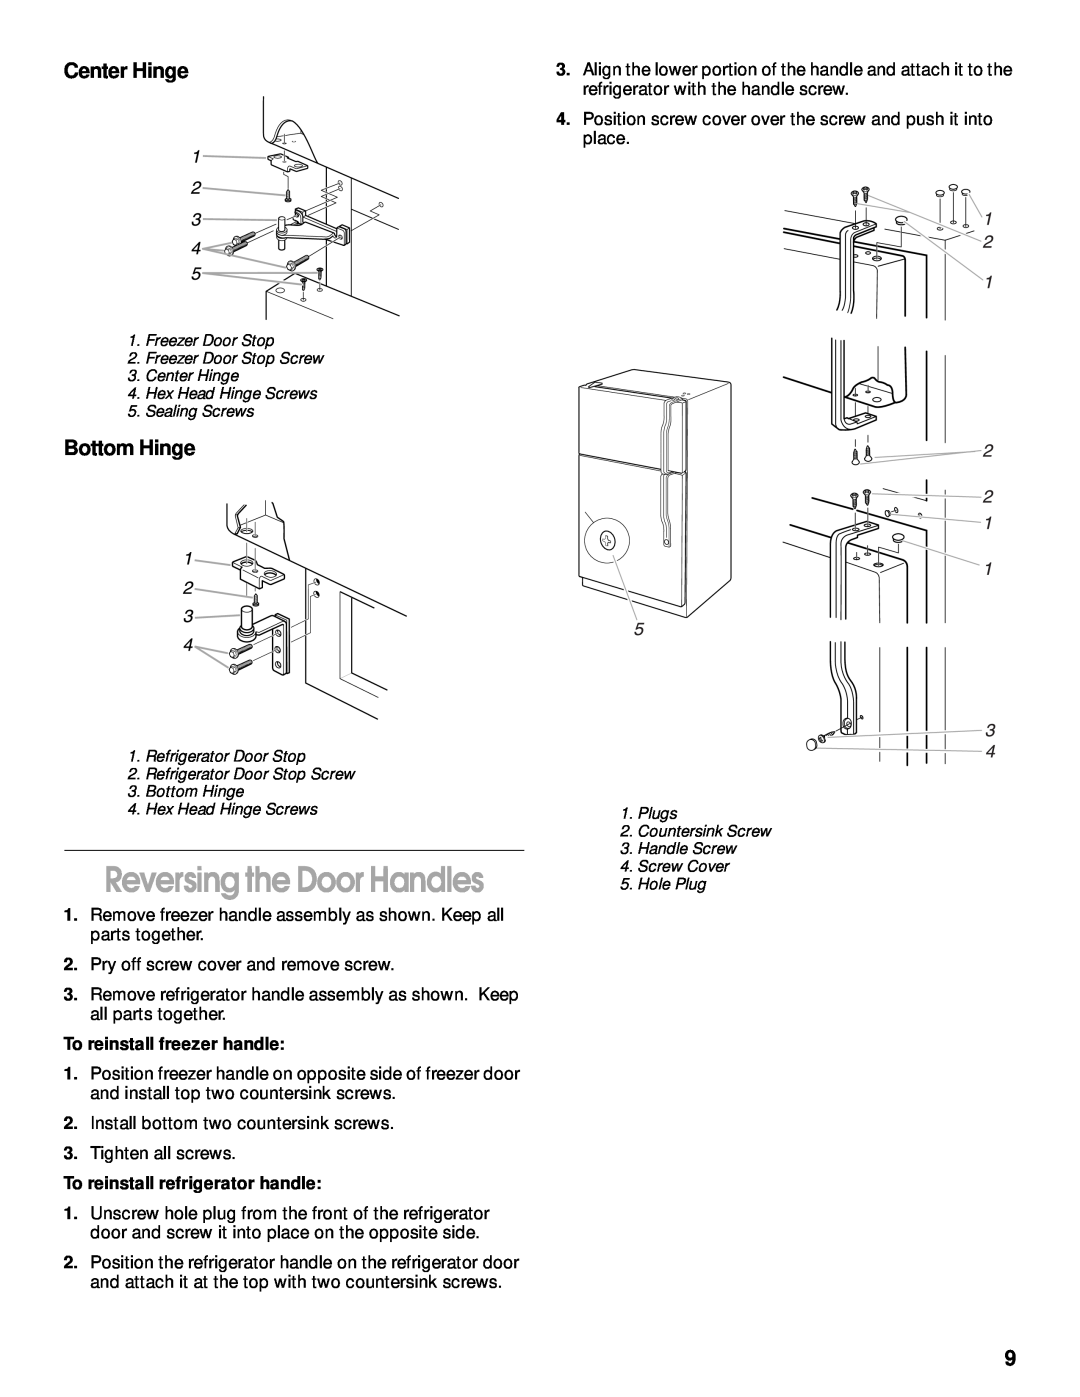 Whirlpool 2199011 manual Reversing the Door Handles, Center Hinge, Bottom Hinge, To reinstall freezer handle 